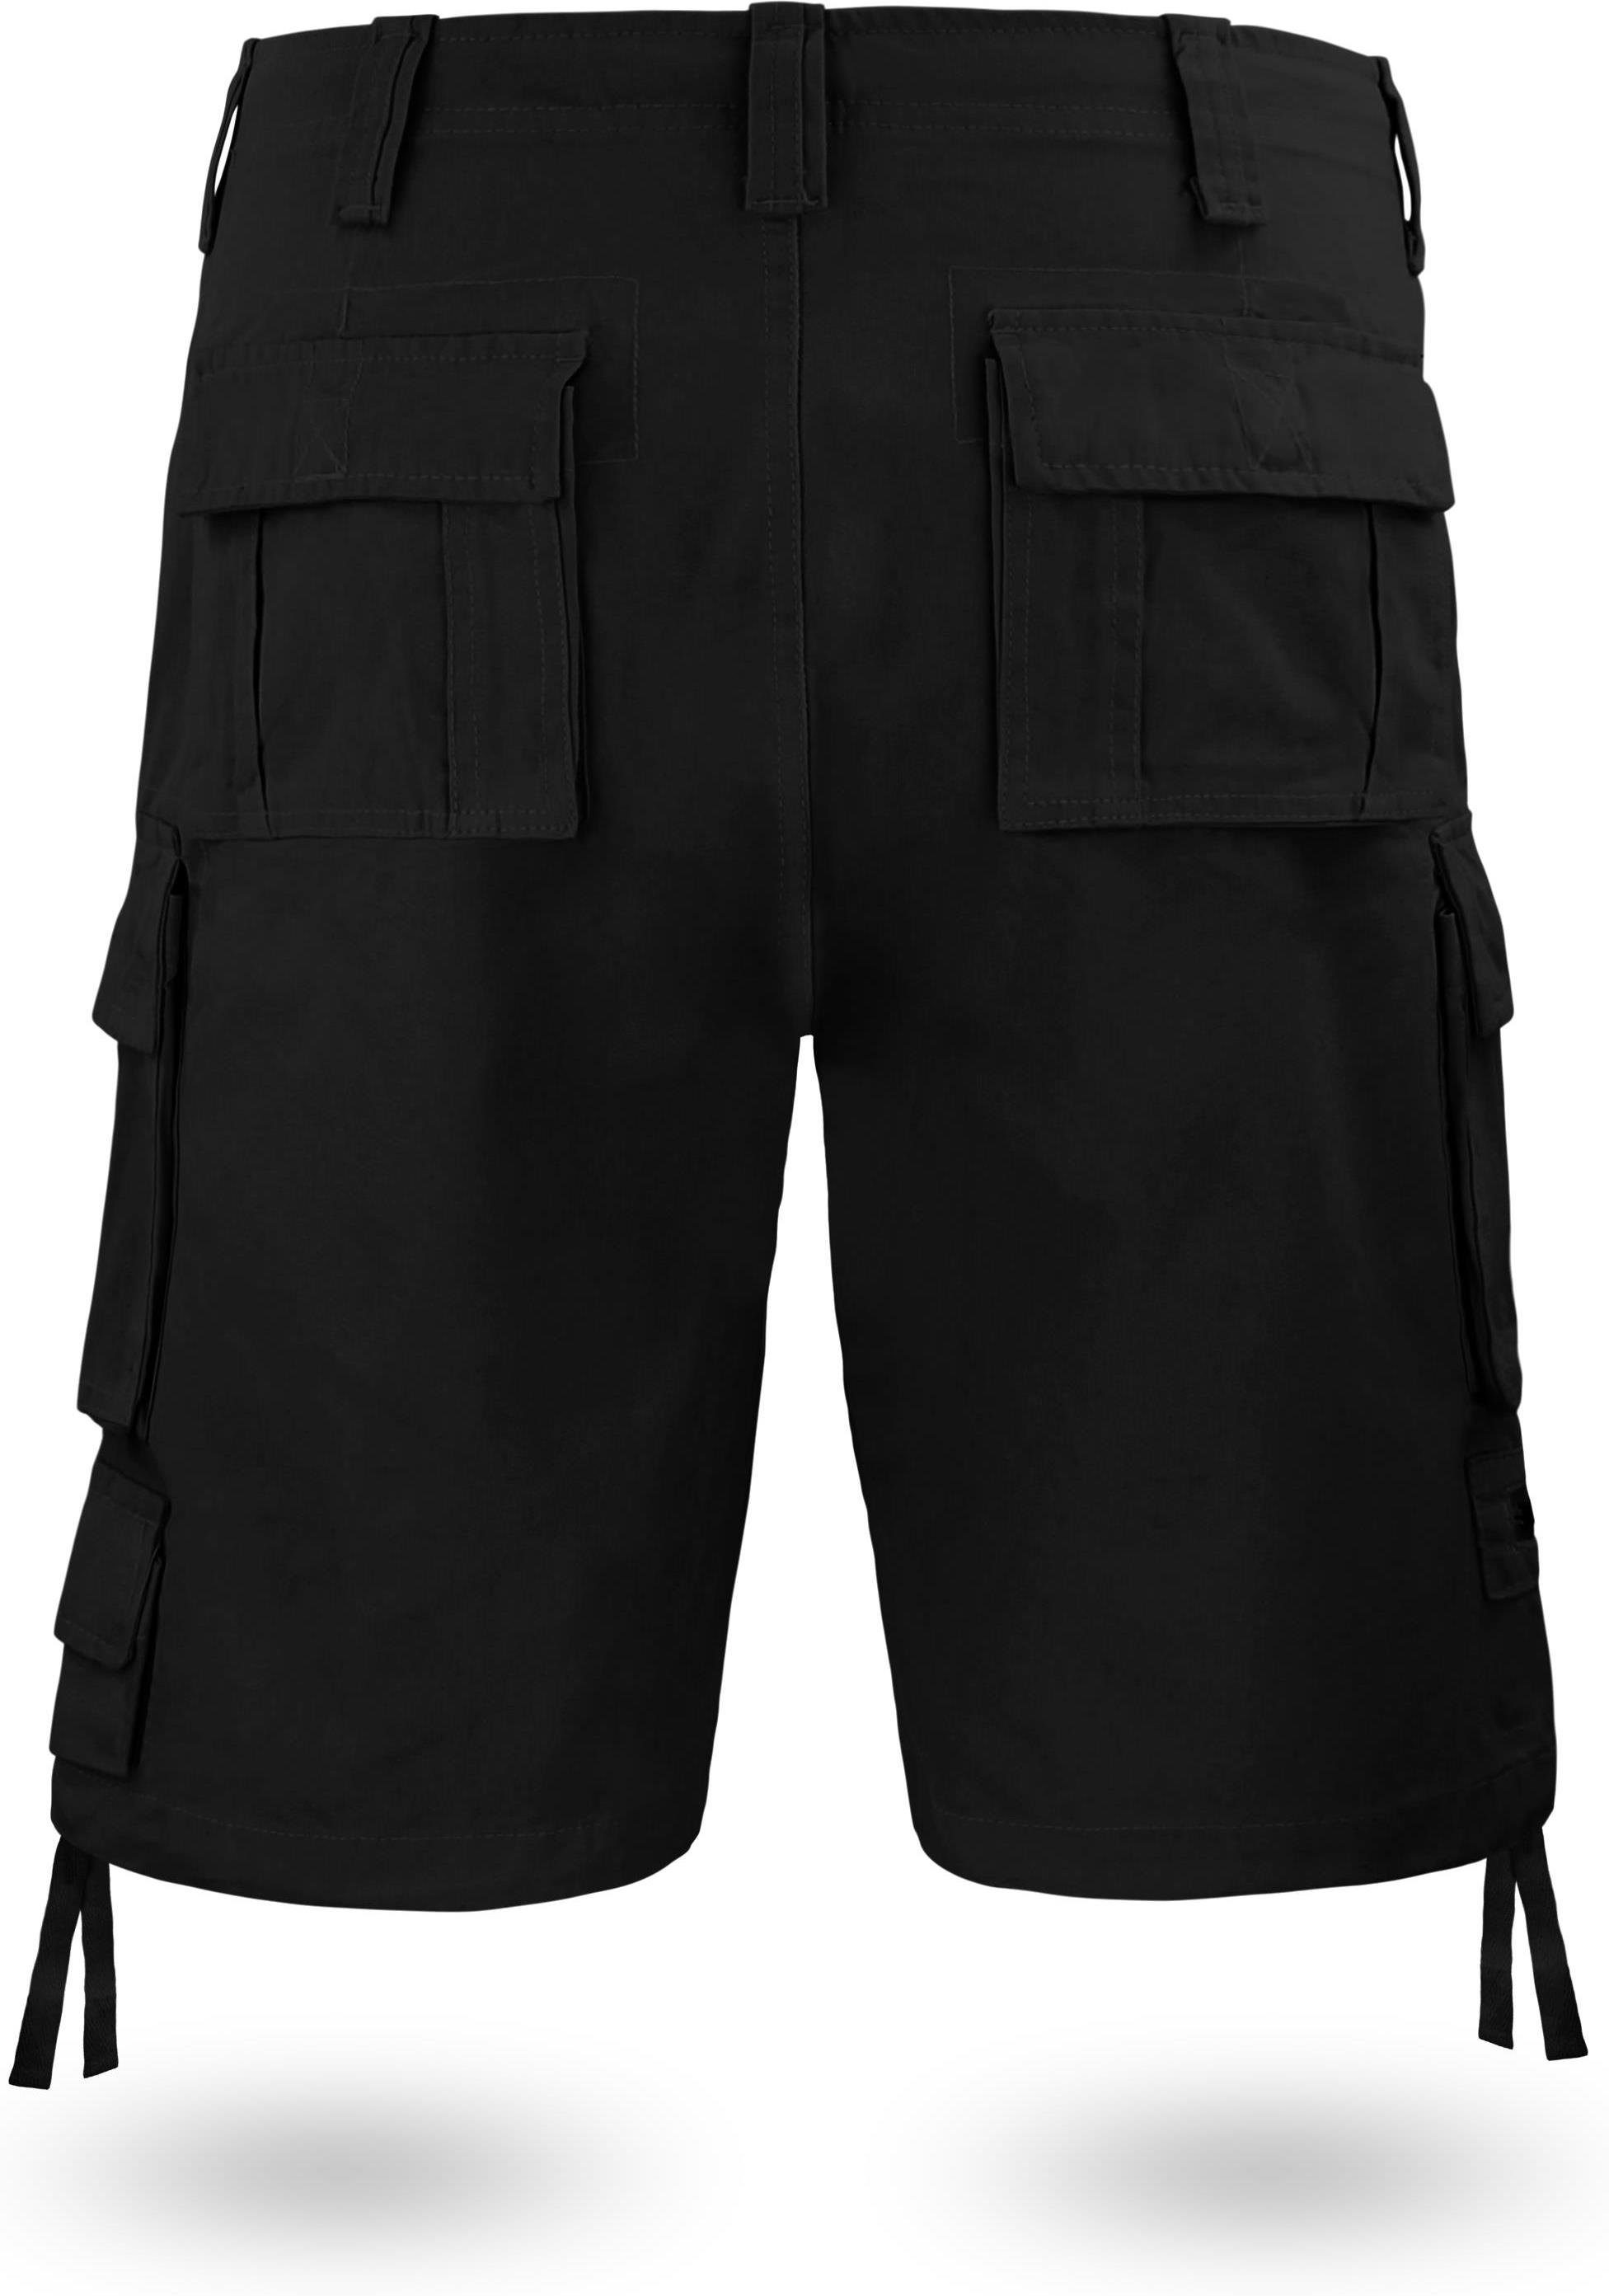 normani Bermudas 100% Herren Shorts Schwarz Atacama aus kurze Vintage Bio-Baumwolle Cargoshorts Shorts Sommershorts